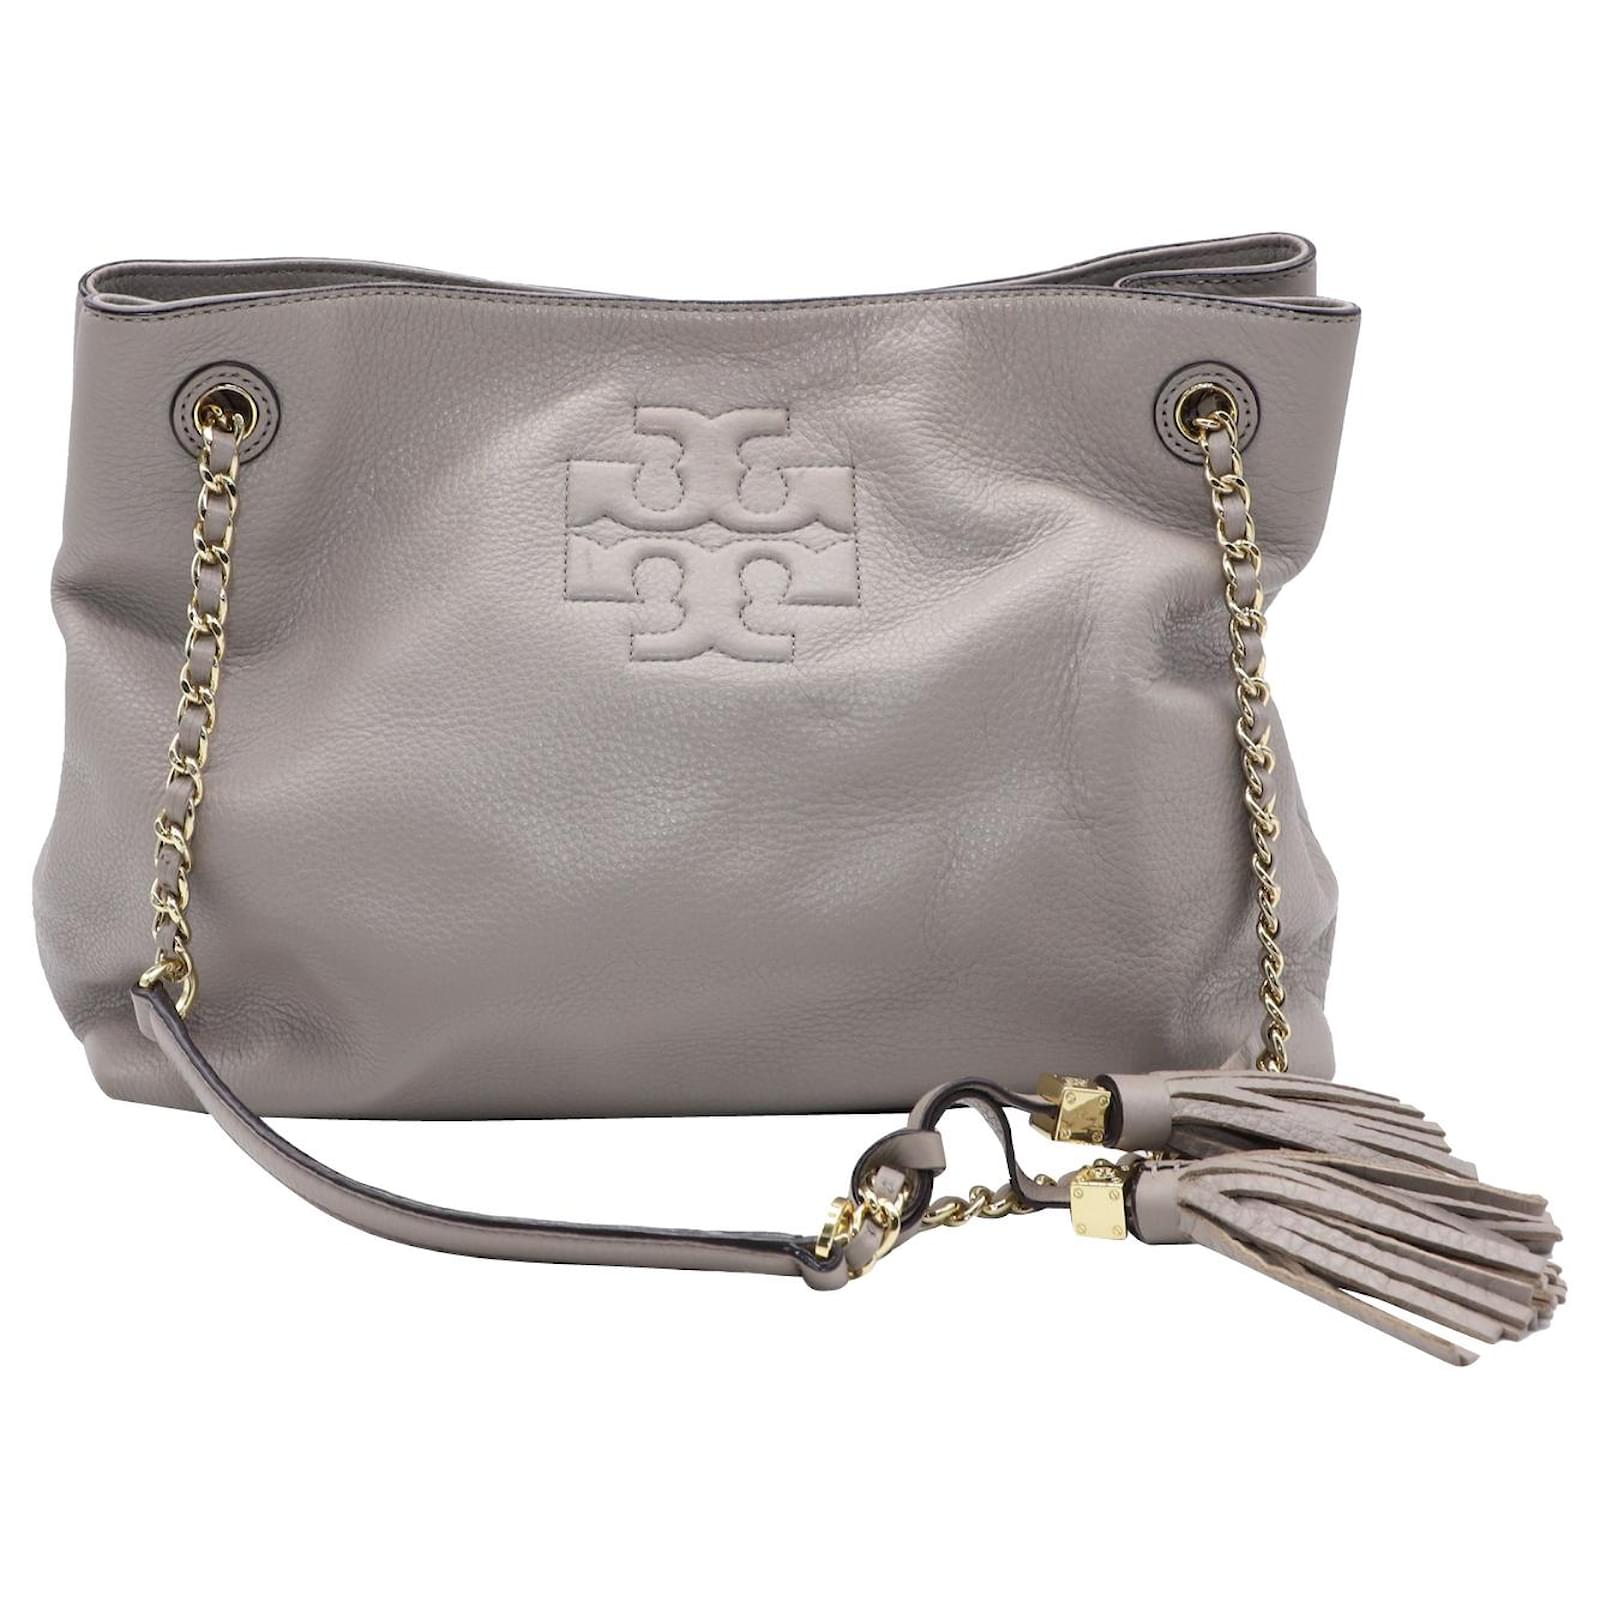 Tory Burch Silver Thea Chain Leather Crossbody Bag